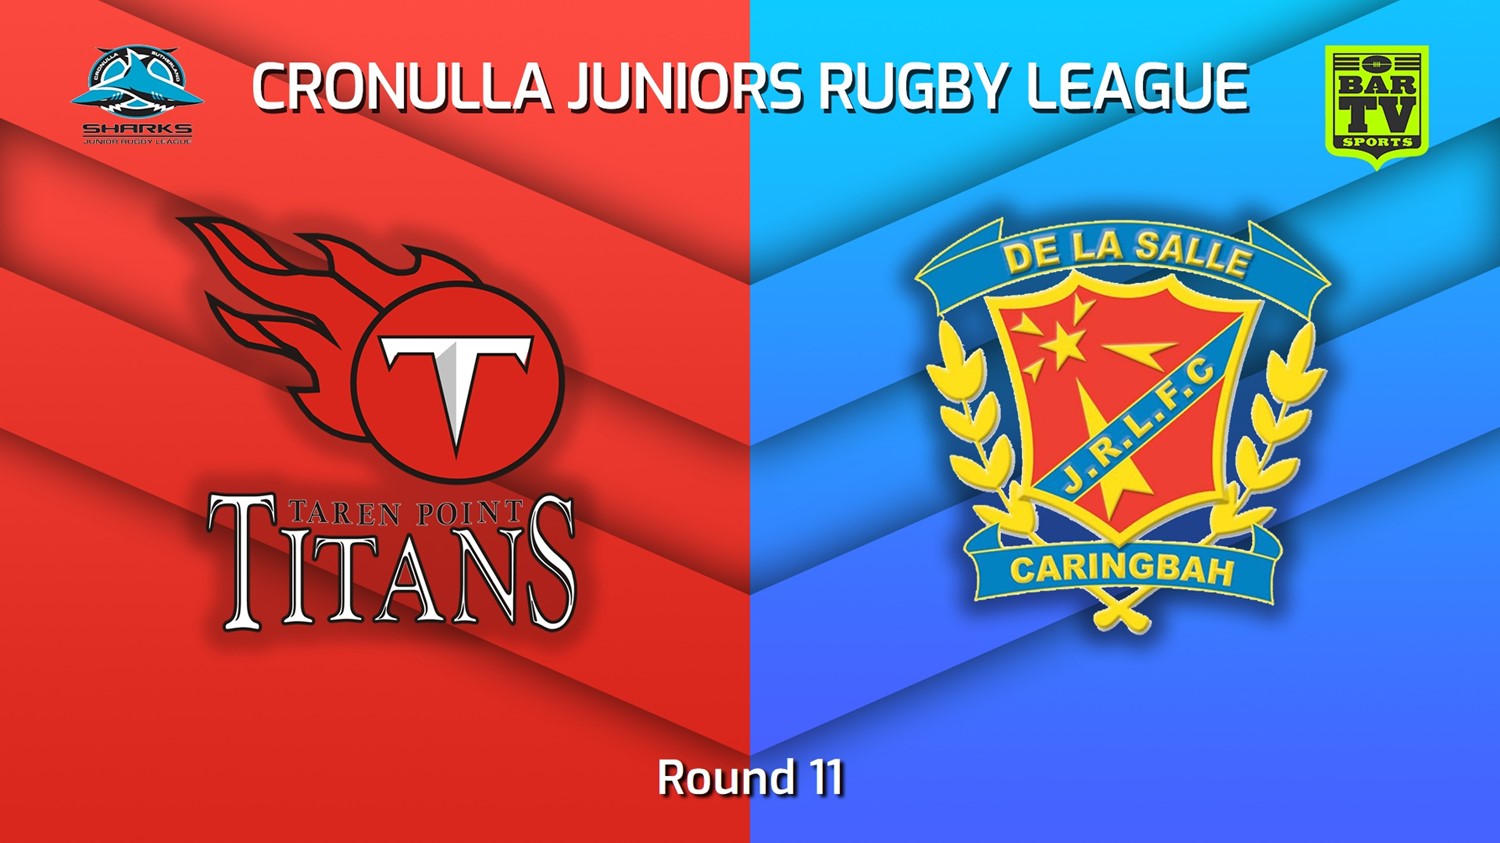 220717-Cronulla Juniors - U17 Gold Round 11 - Taren Point Titans v De La Salle Slate Image